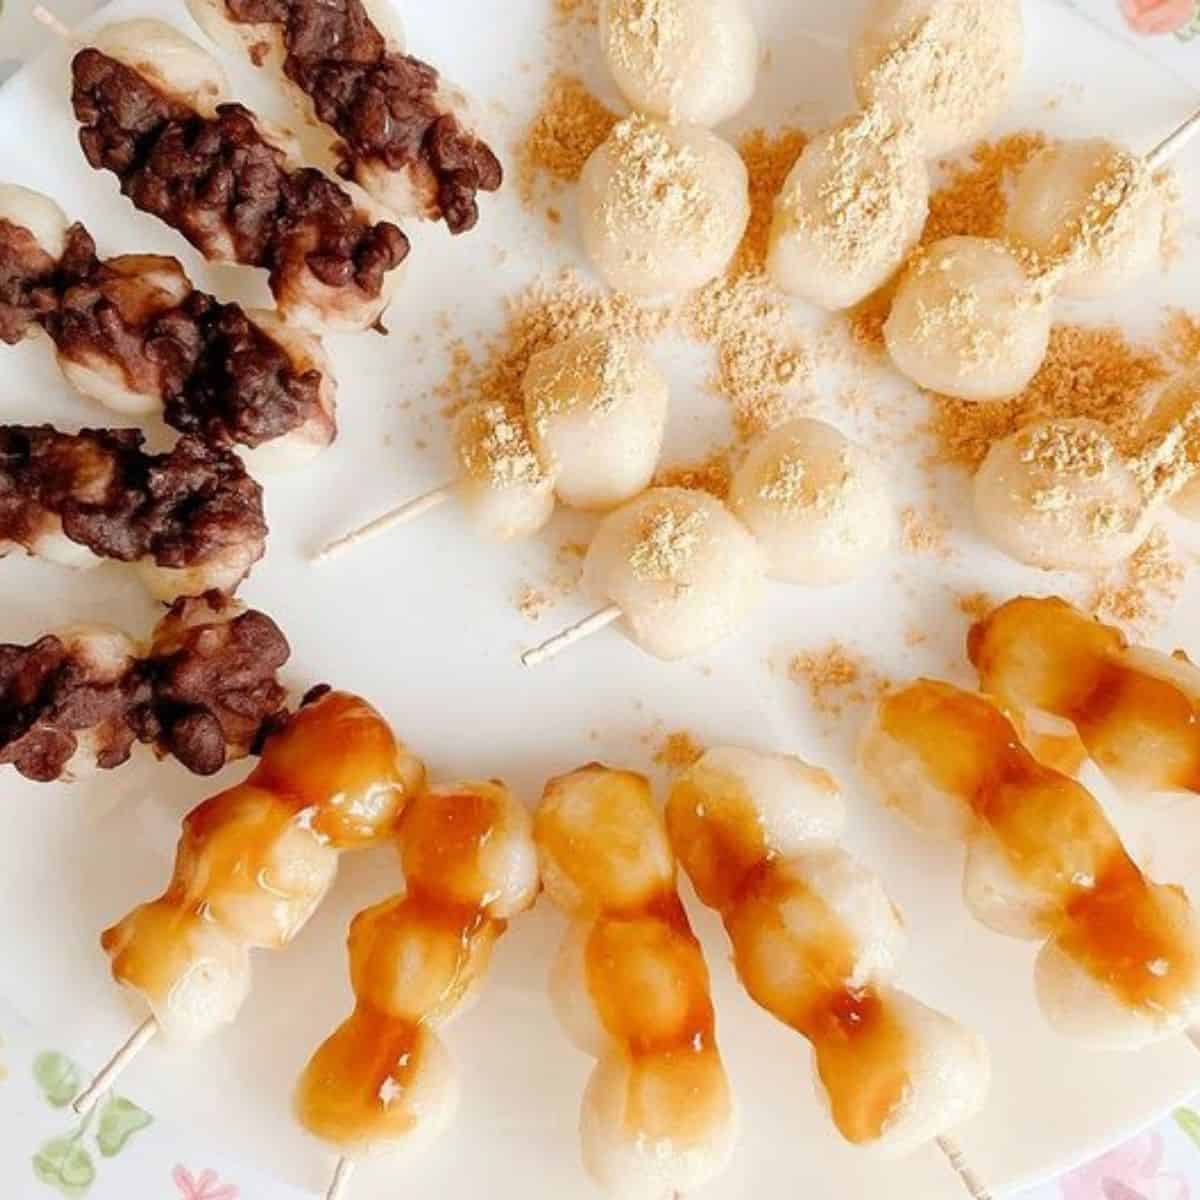 Japanese skewered dumplings of different kinds